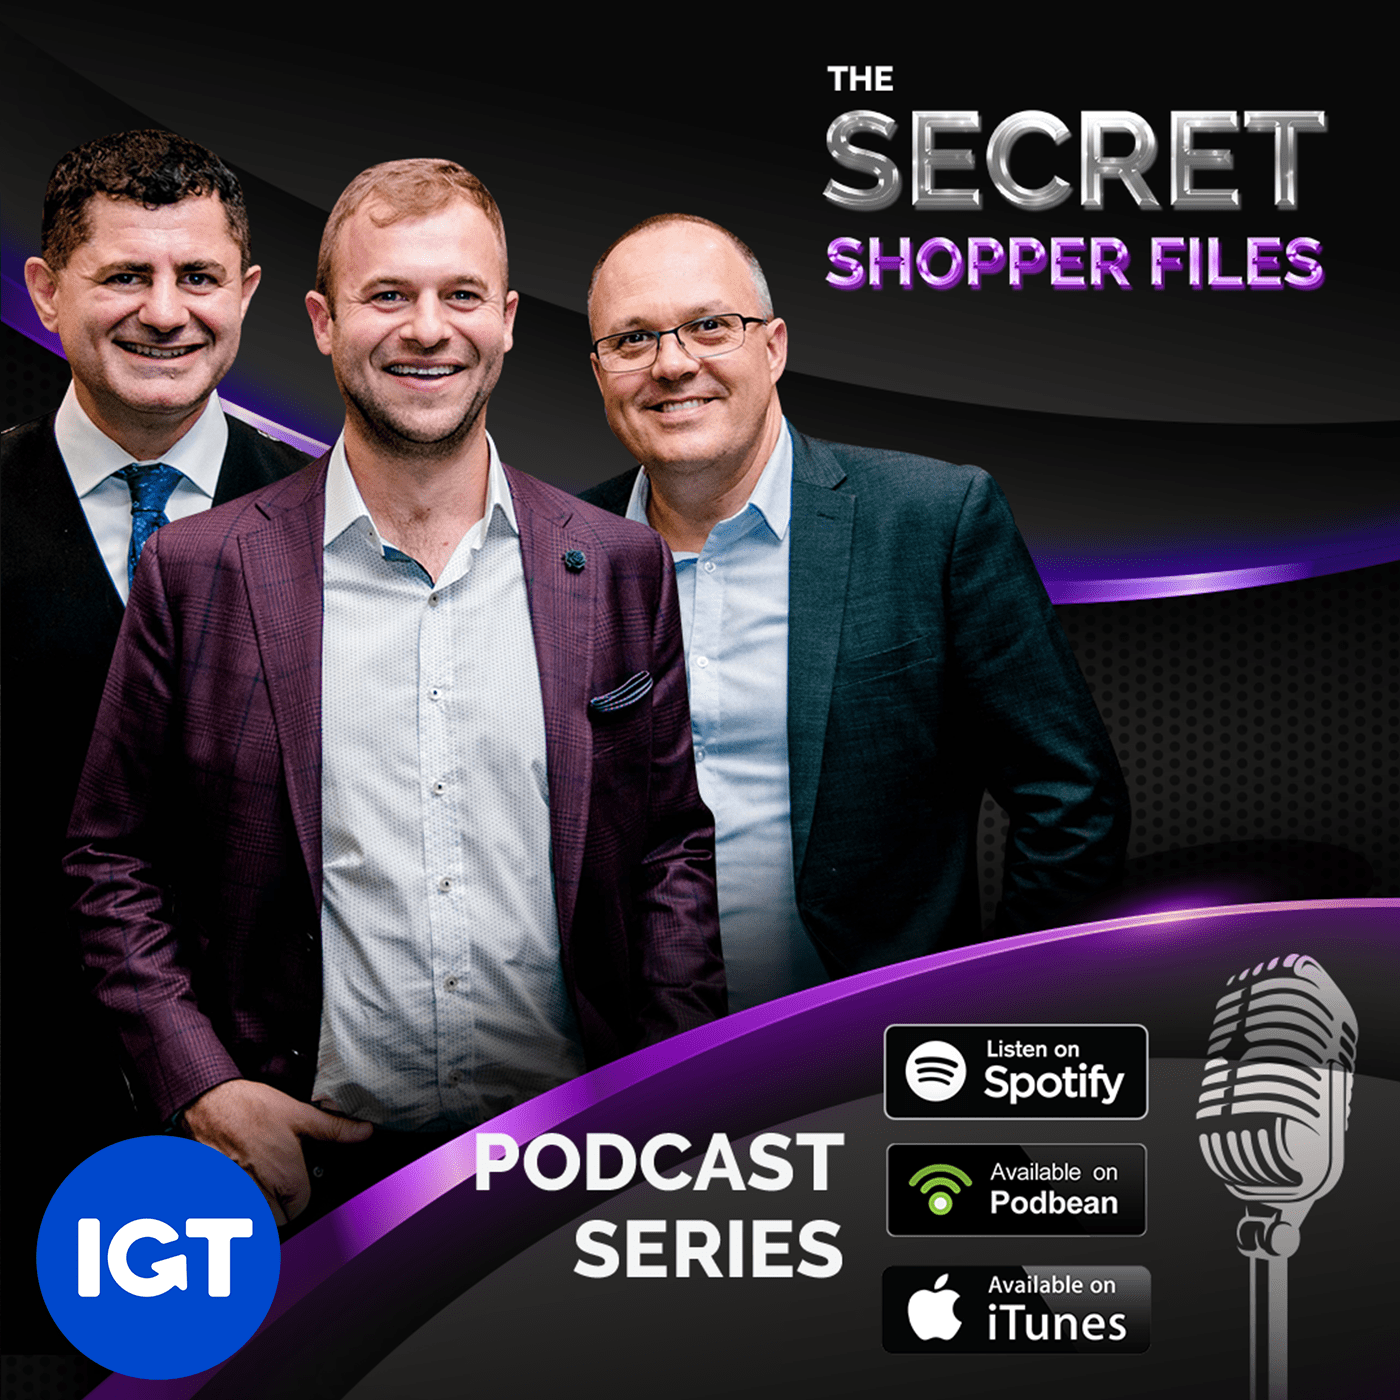 The Secret Shopper Files